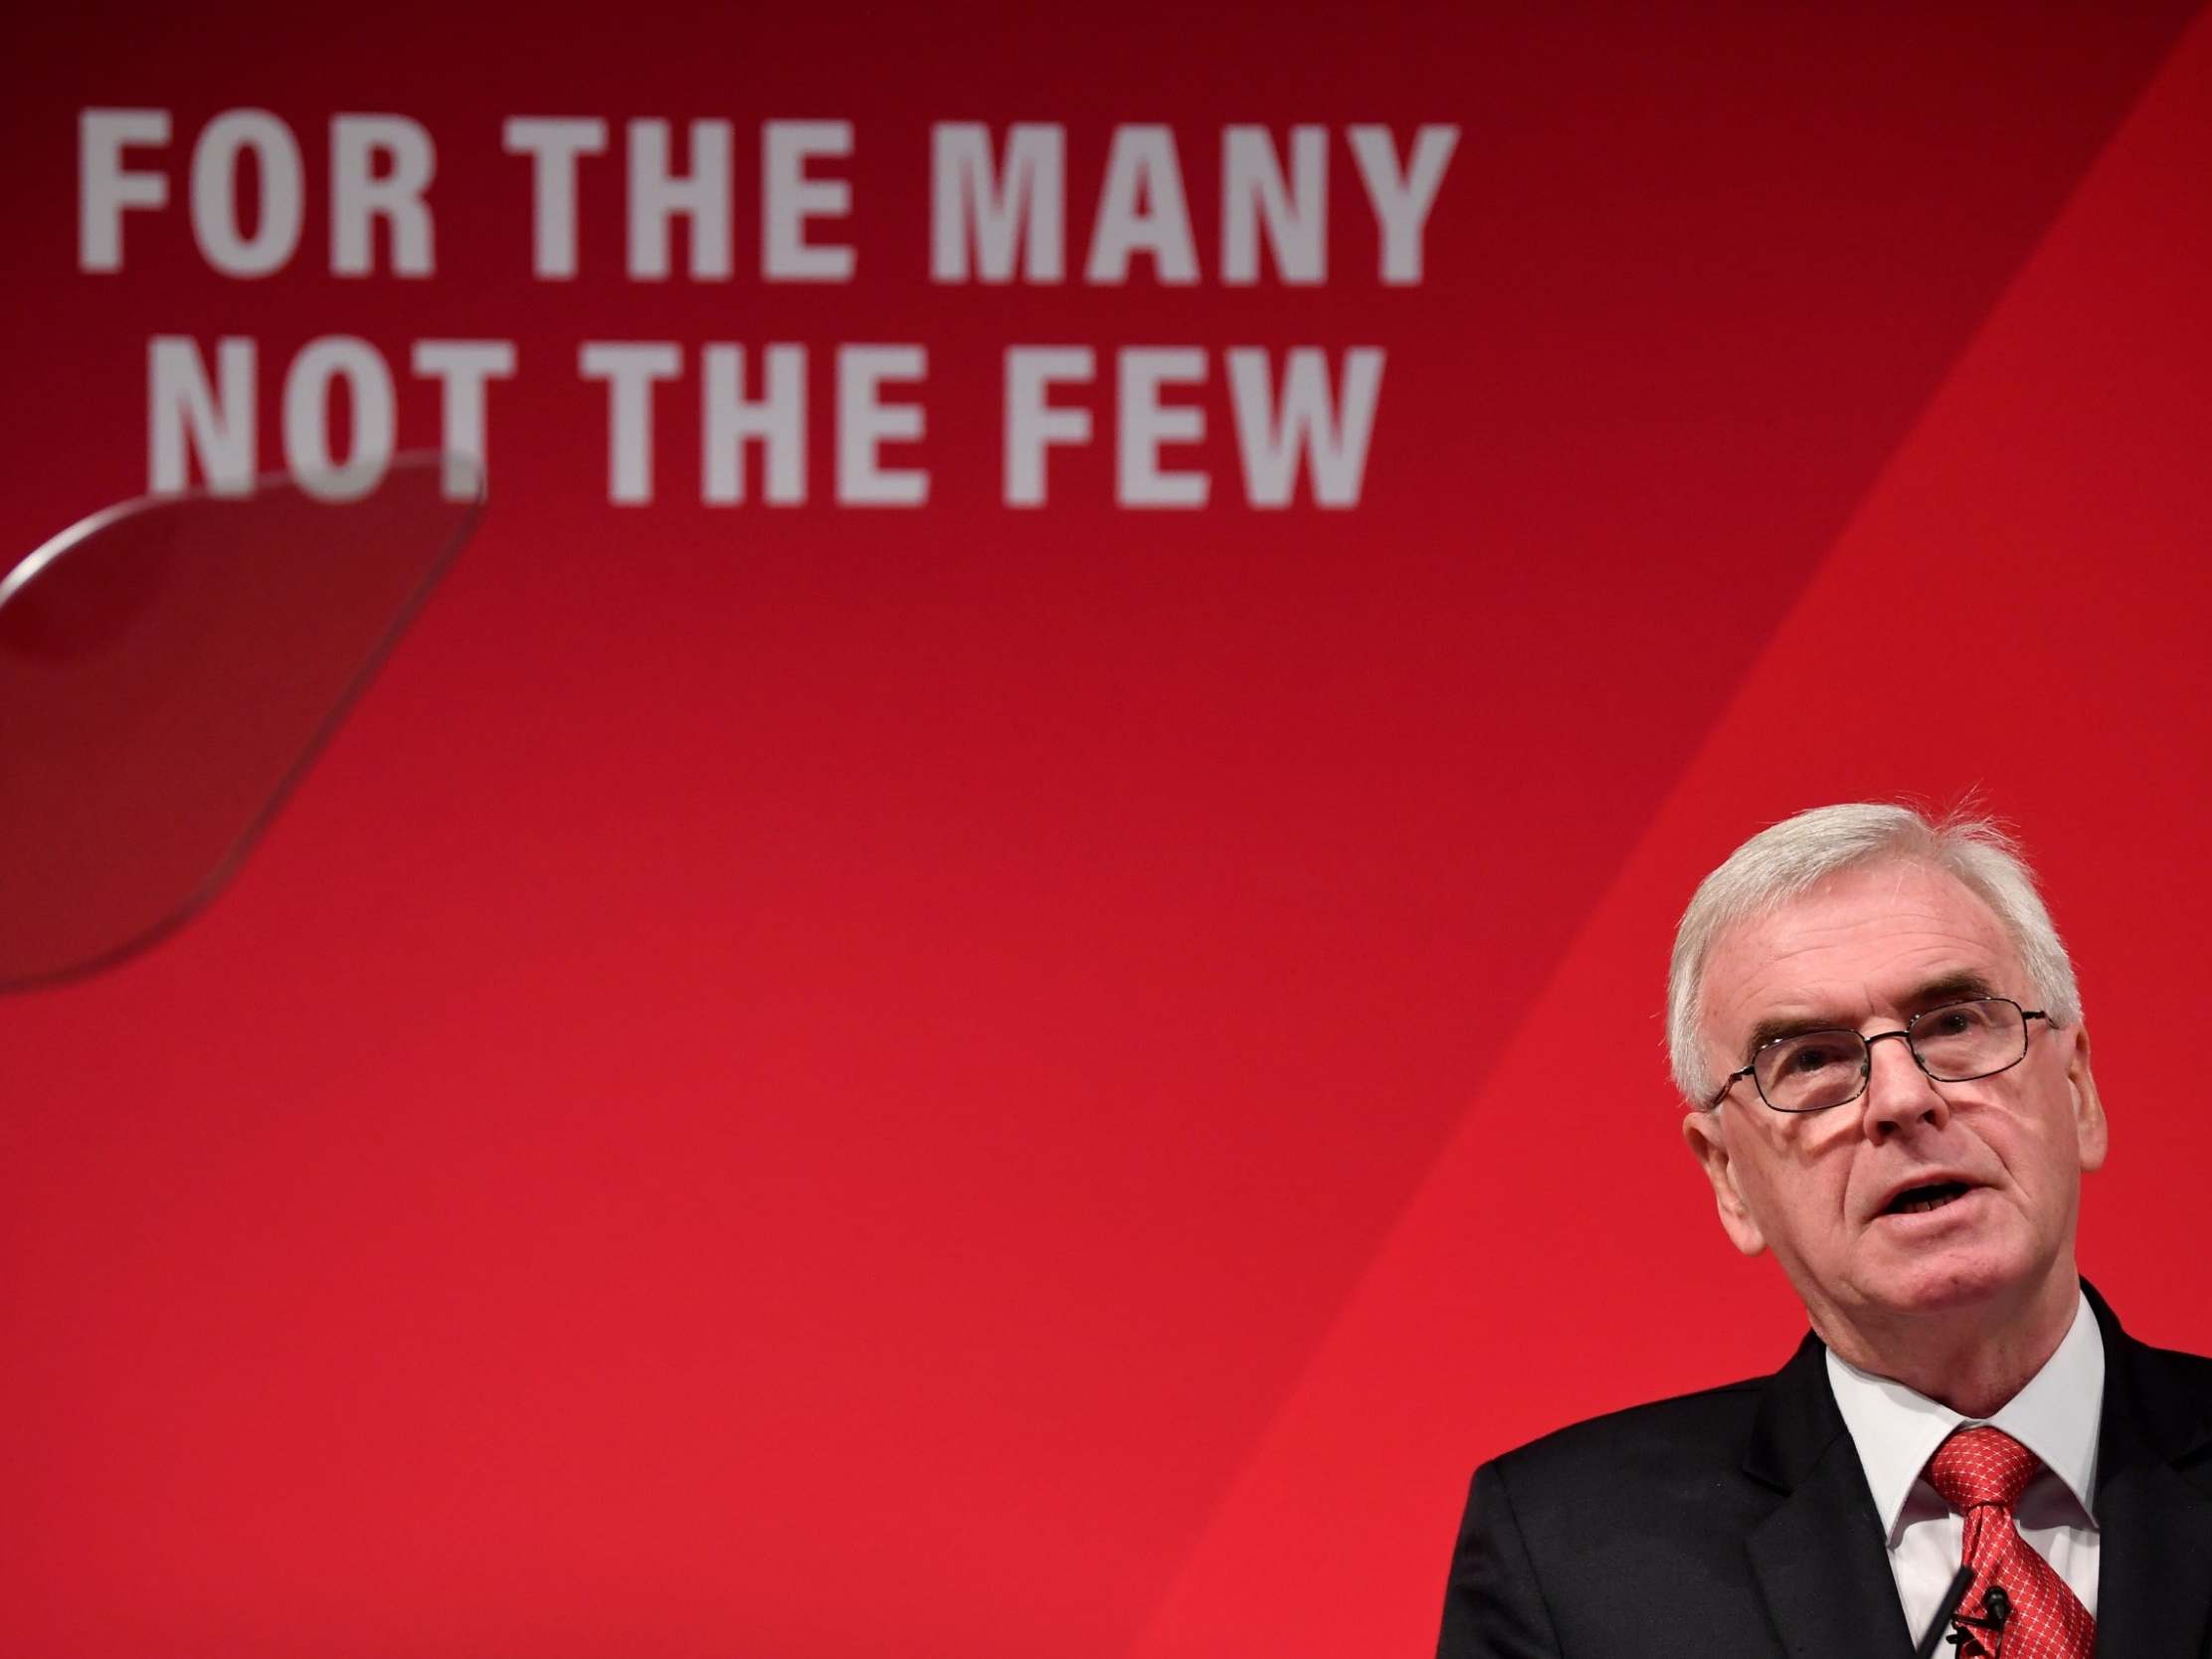 The Labour shadow chancellor John McDonnell